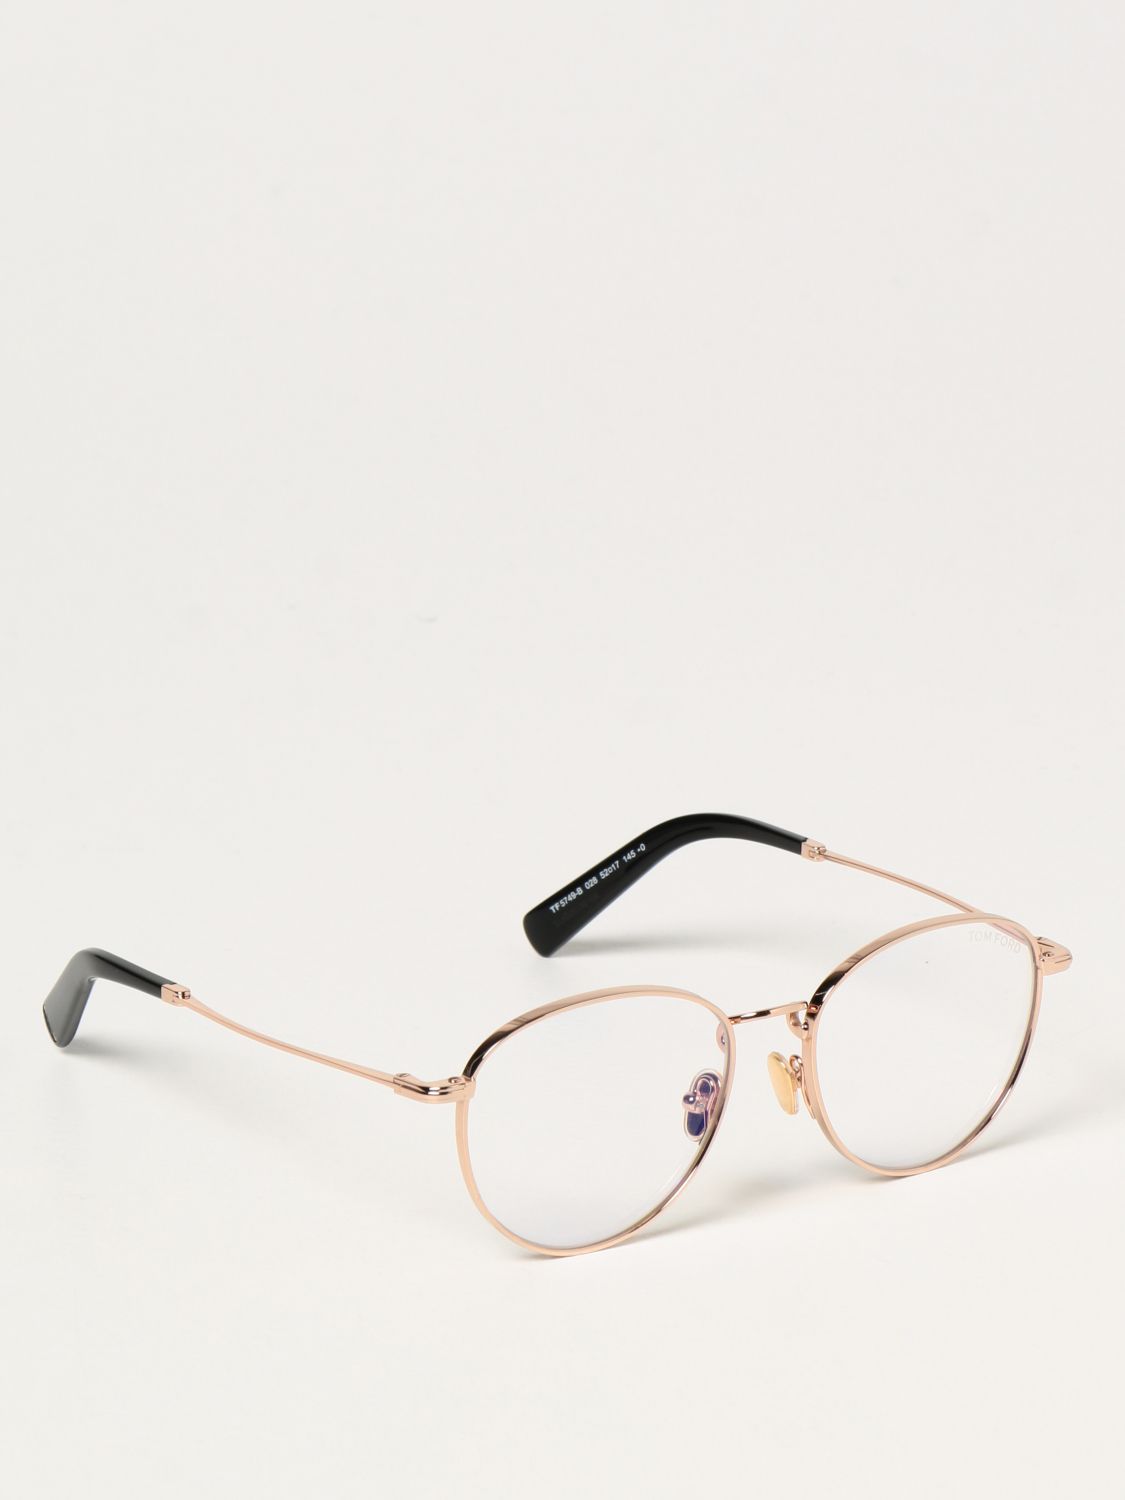 Glasses Tom Ford: Tom Ford metal eyeglasses gold 1